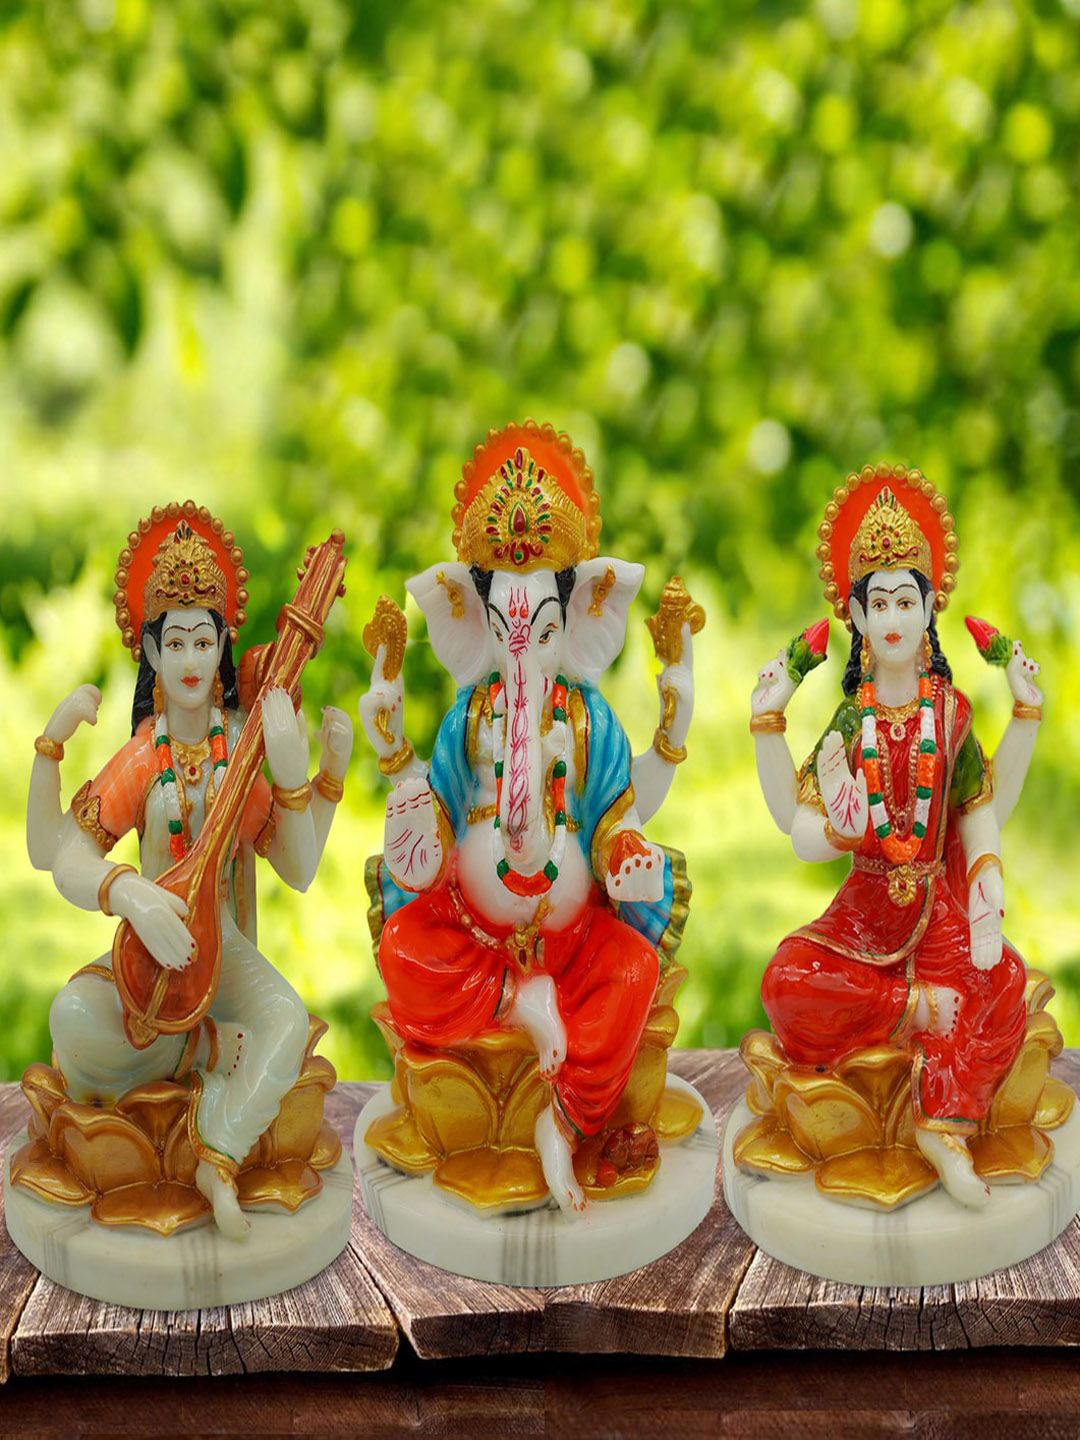 Gallery99 Hand painted Laxmi, Ganesh & Sarasvati Idol For Pooja Room Decoration Price in India